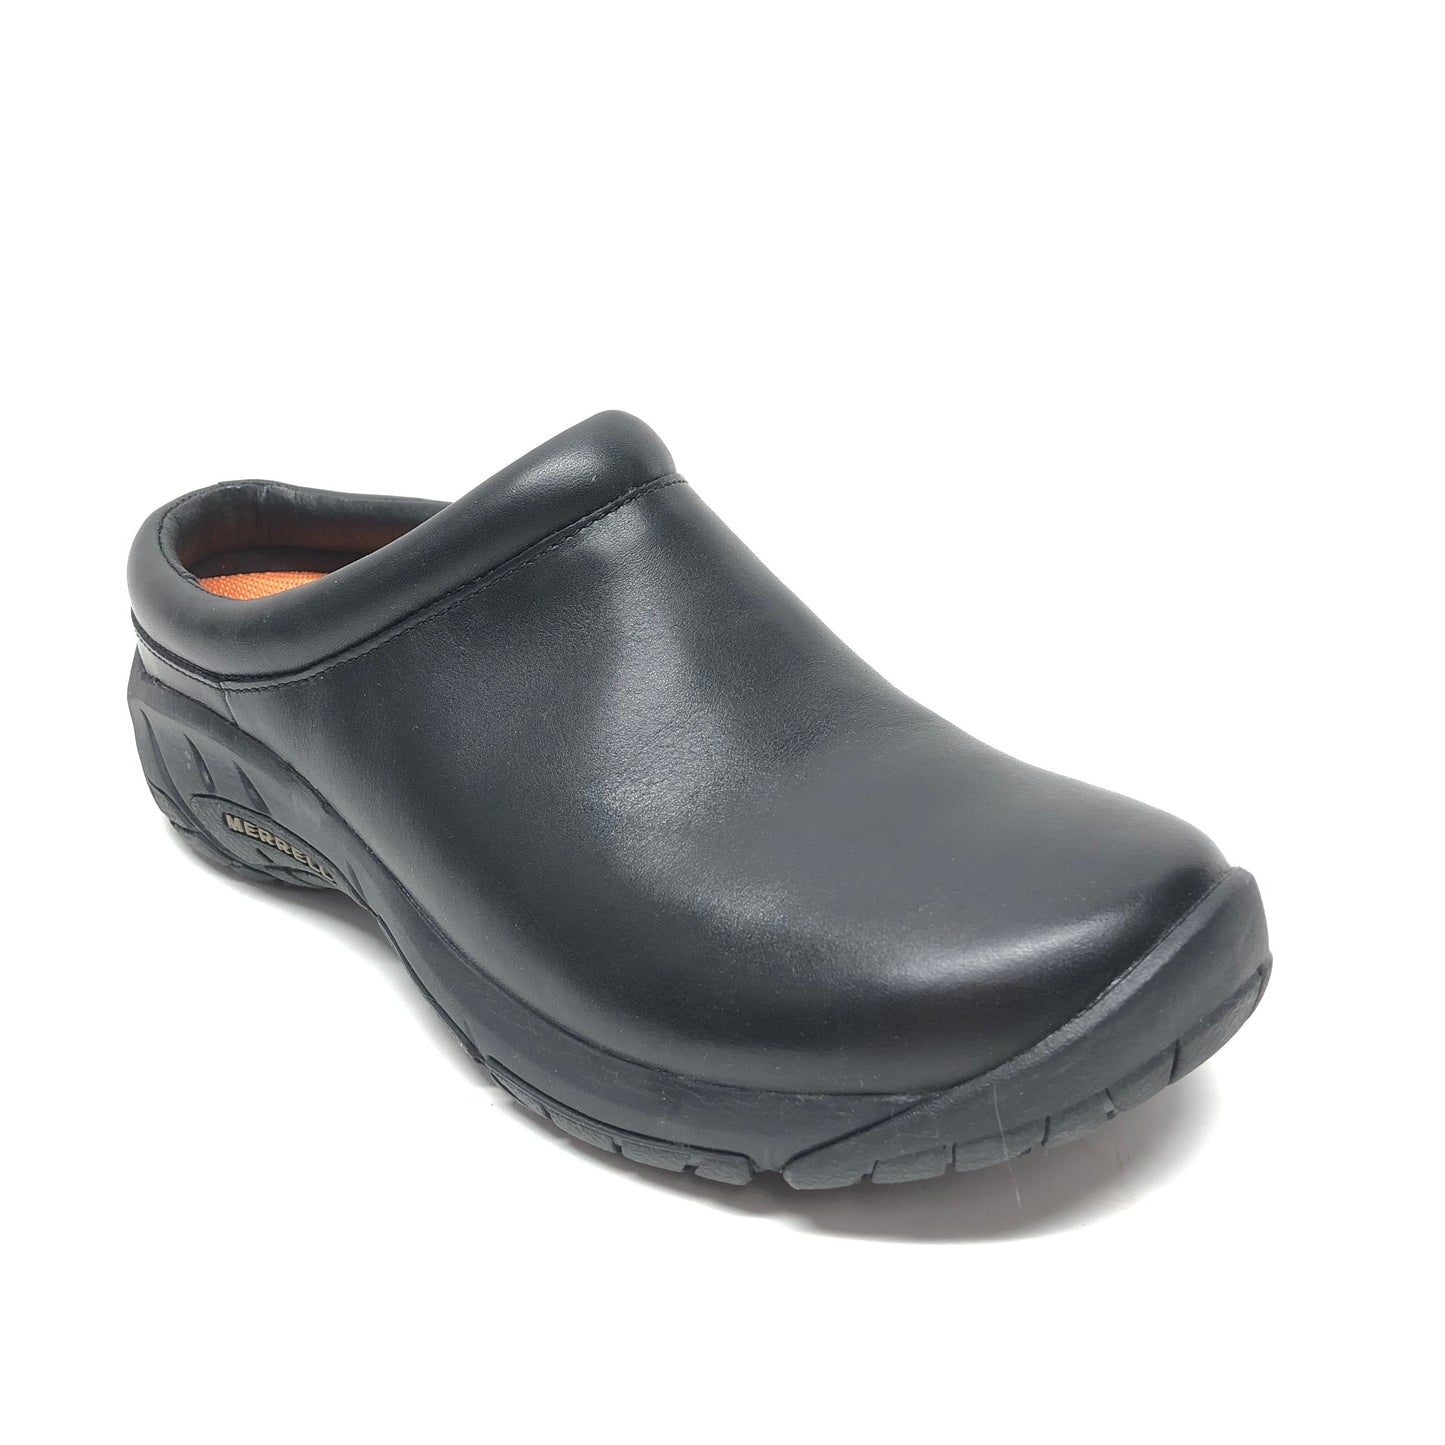 Black Shoes Flats Merrell, Size 7